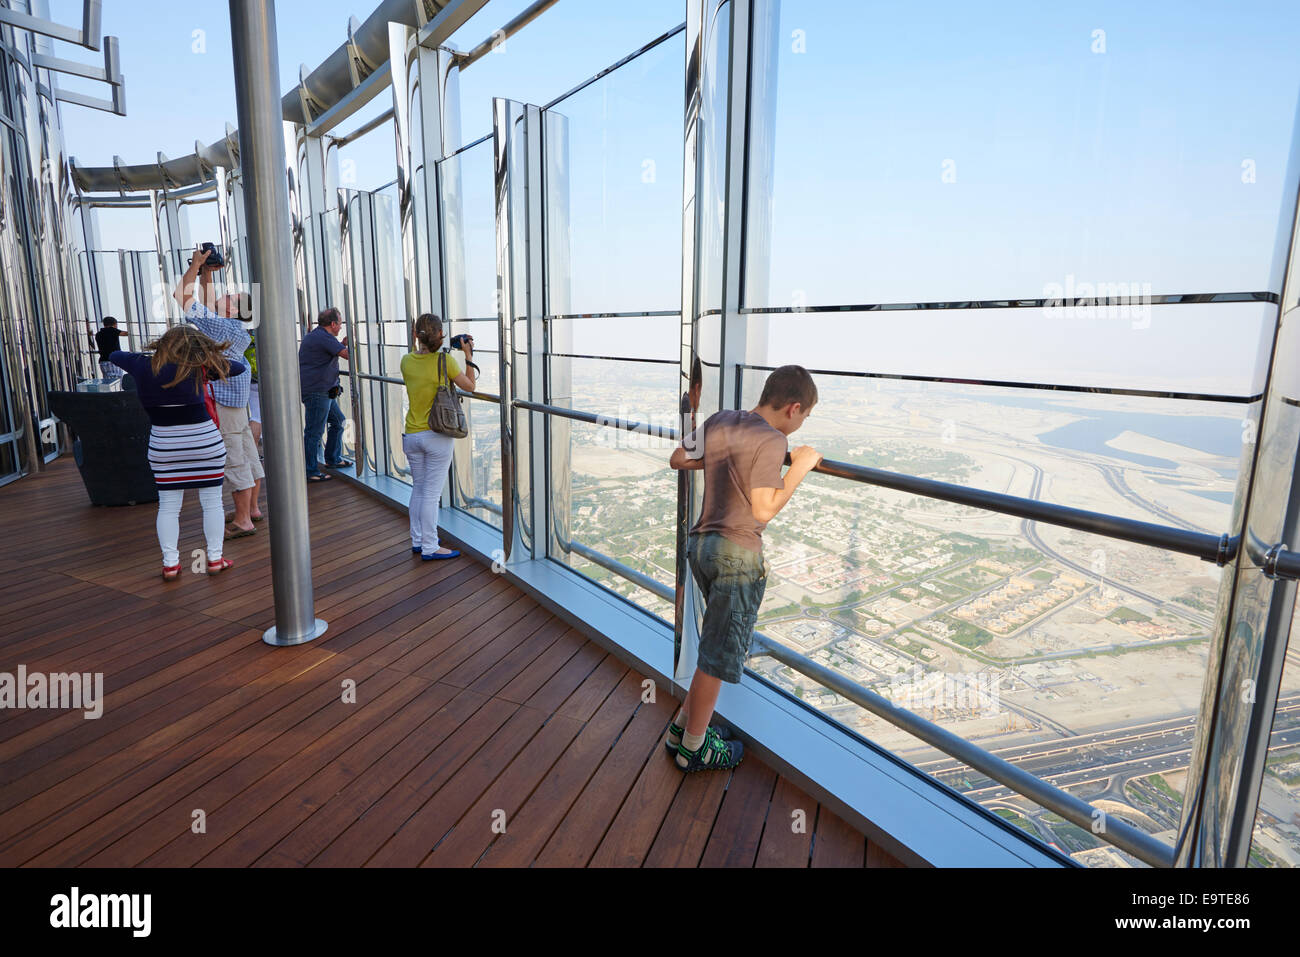 The World's Highest Observation Deck At 555 Meters High On Level 148 Of The Burj Khalifa Dubai UAE Stock Photo